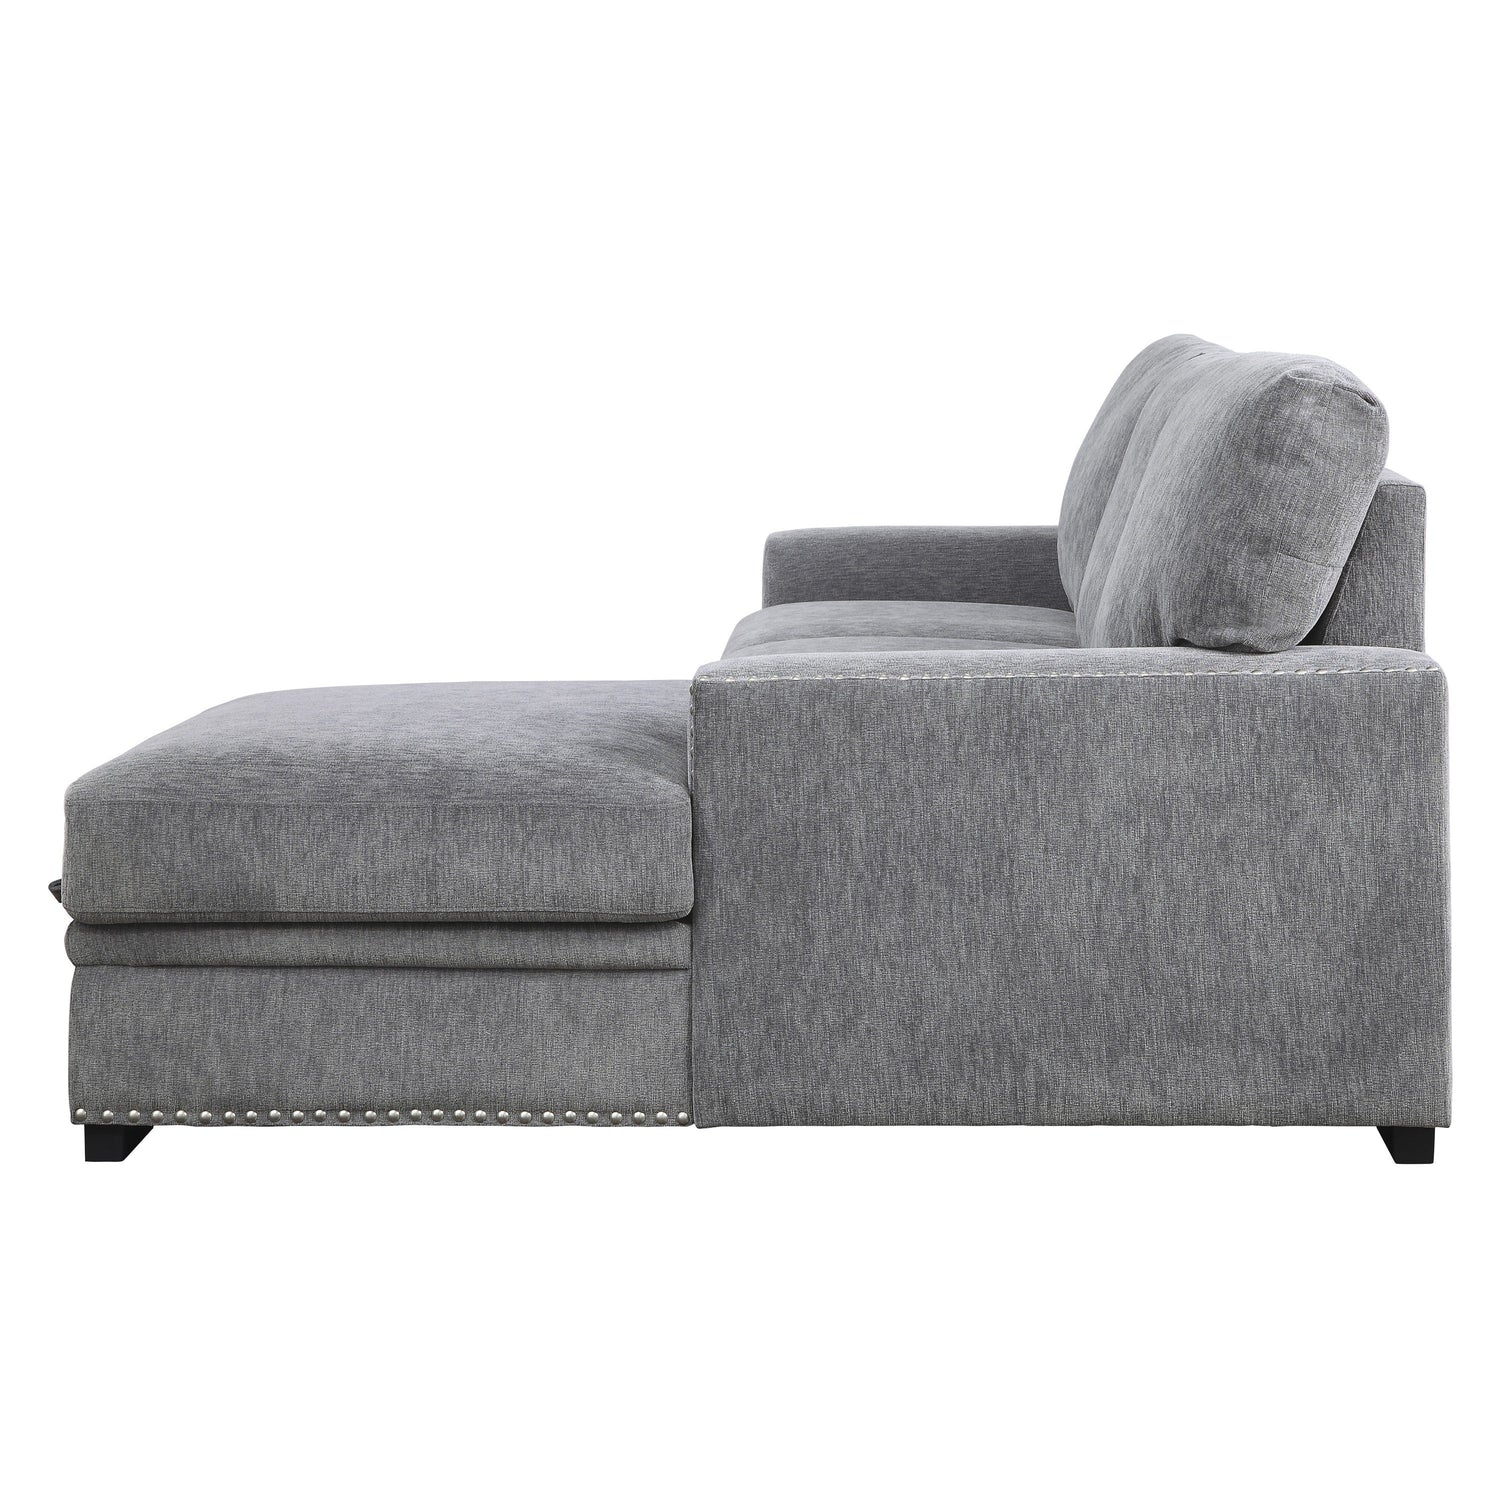 Morelia Gray RAF Storage Sleeper Sofa Chaise - 9468DG*2RC2L - Bien Home Furniture &amp; Electronics